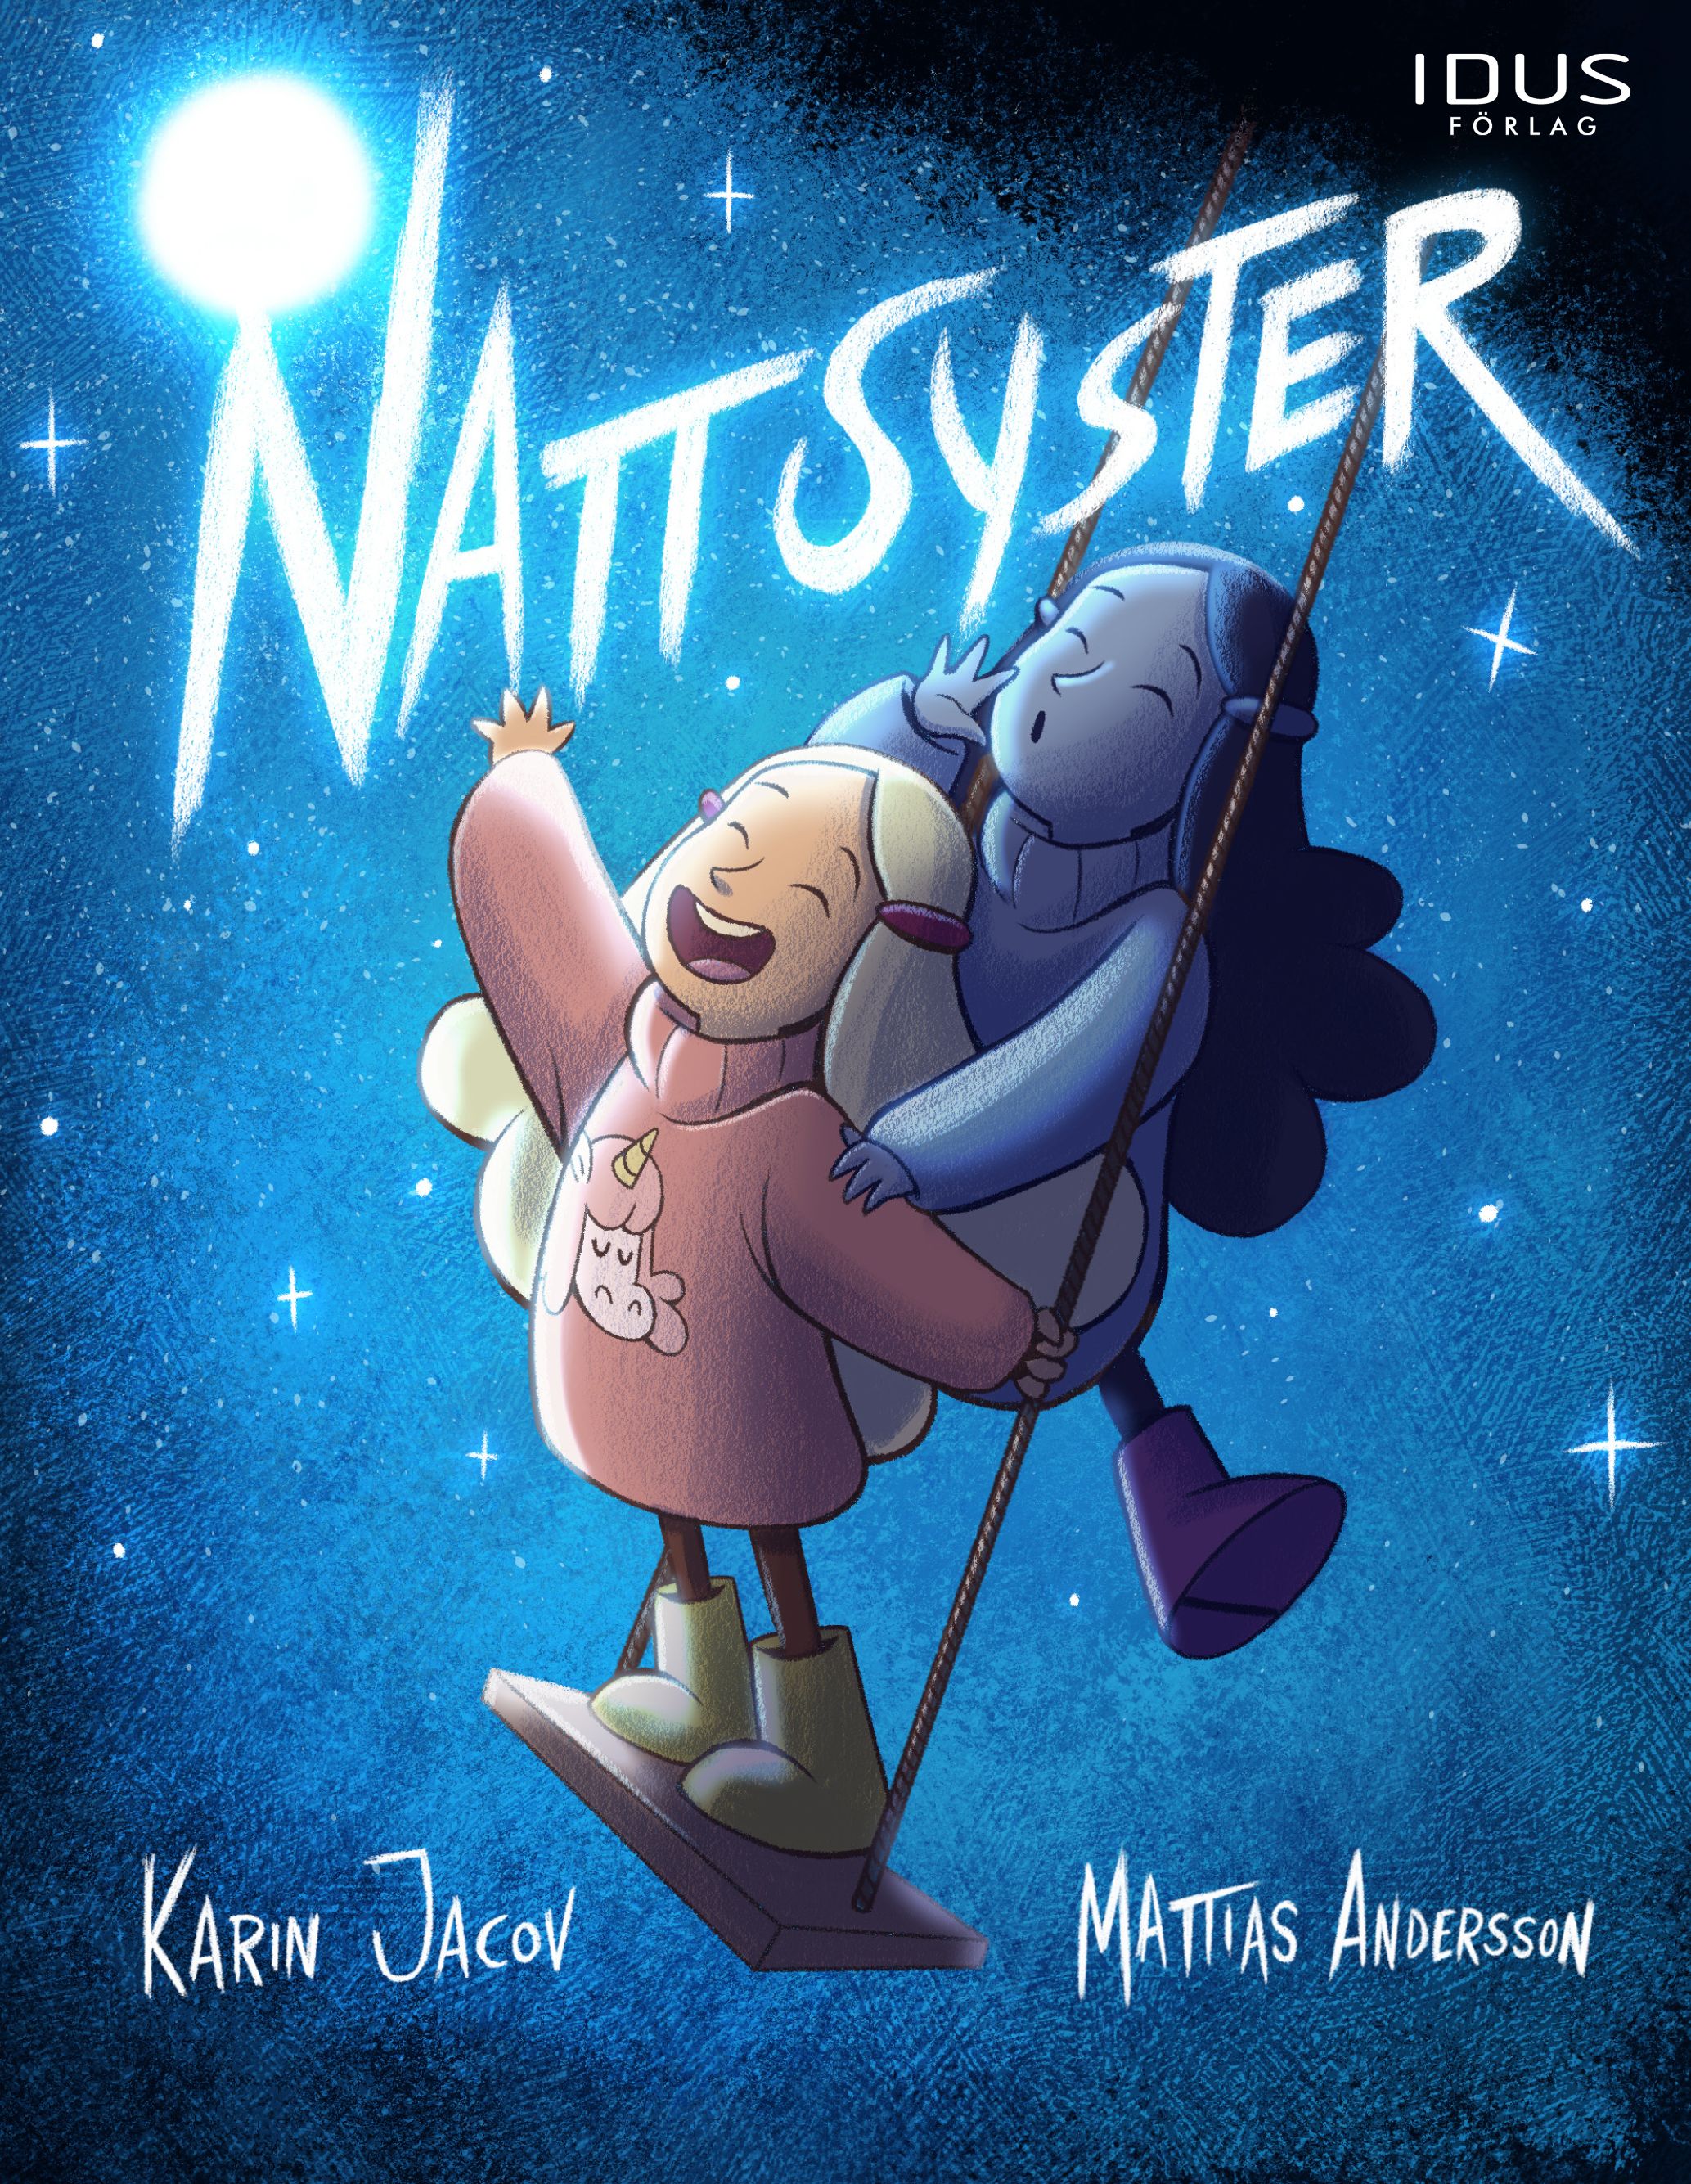 Nattsyster, eBook by Karin Jacov